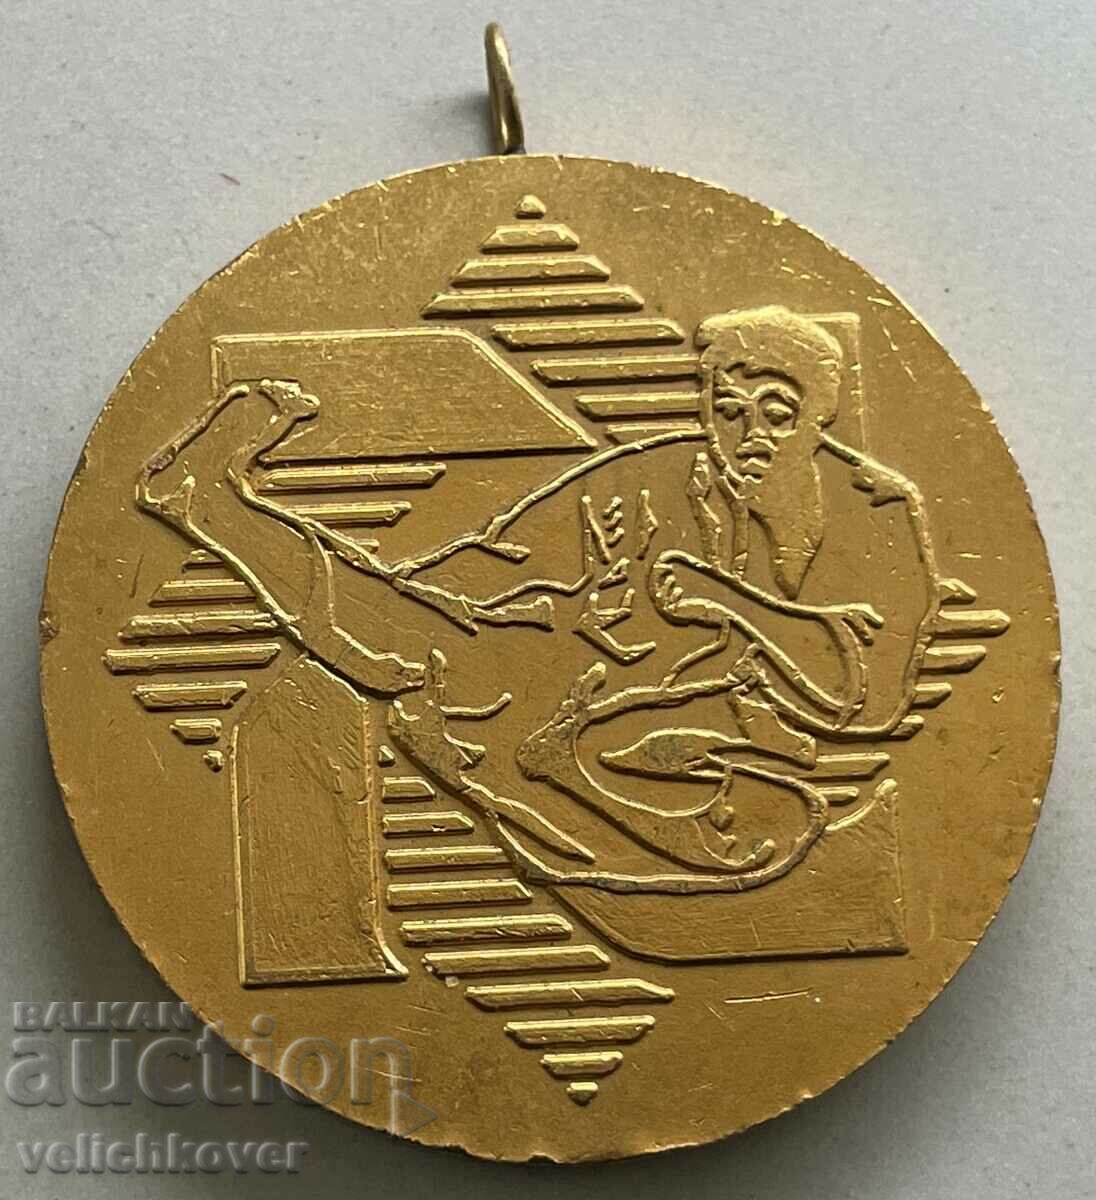 34223 Bulgaria medal Karate Club Khan Asparuh 1989